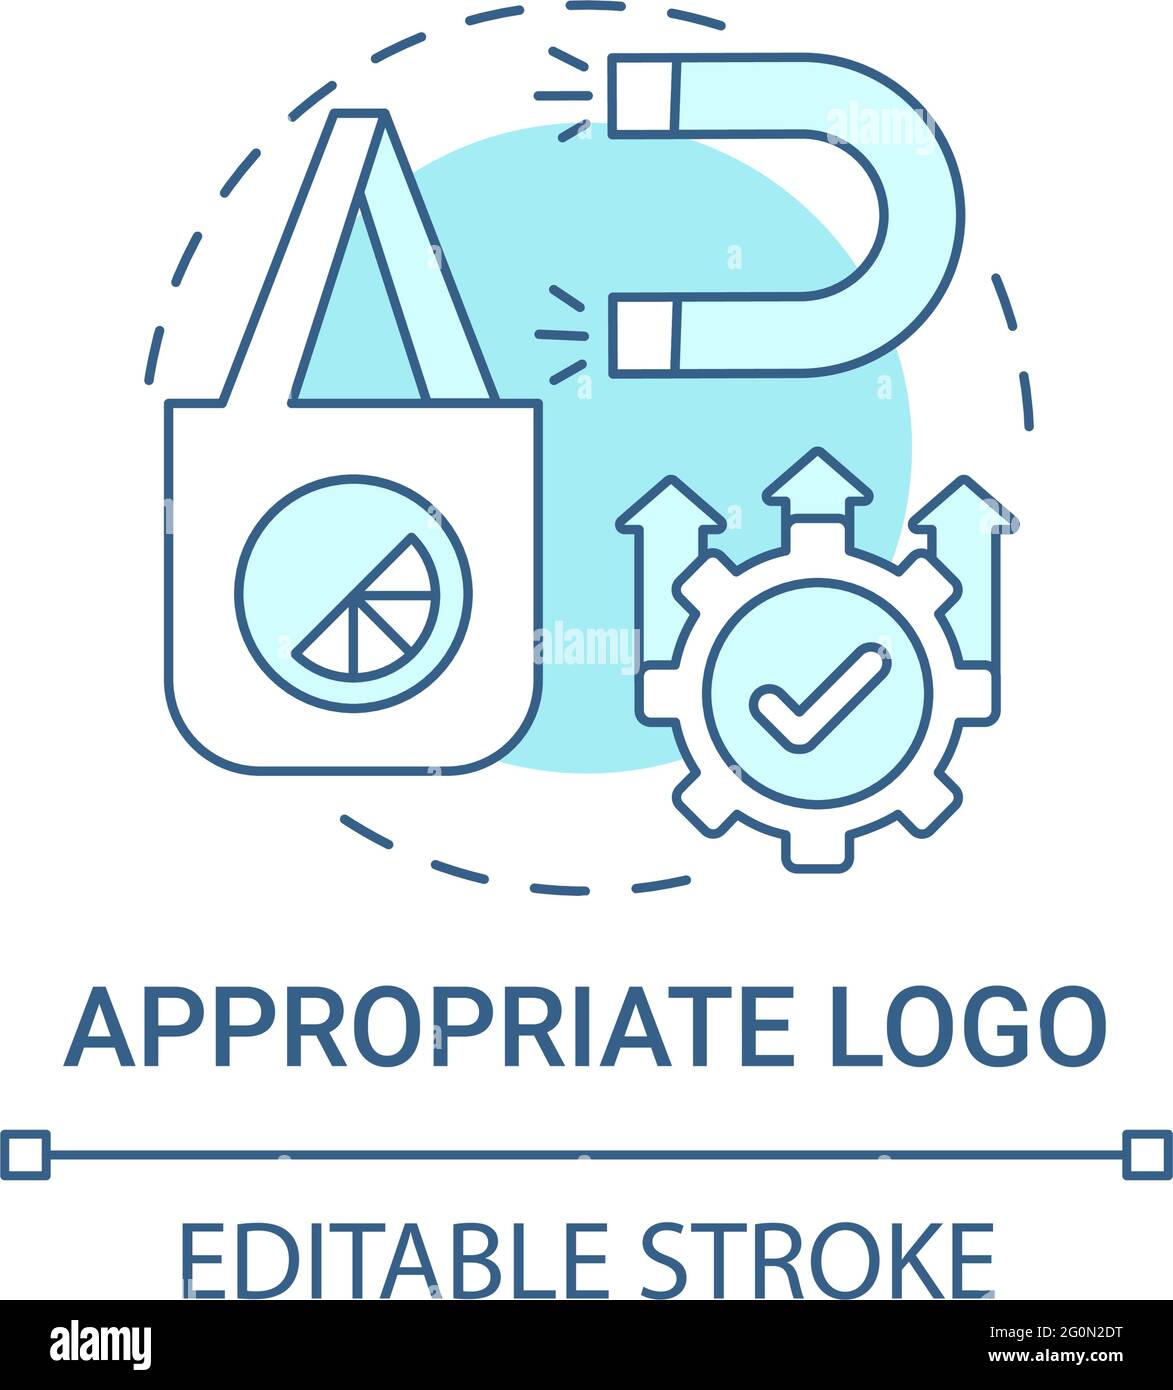 Appropriate logo concept icon Stock Vector